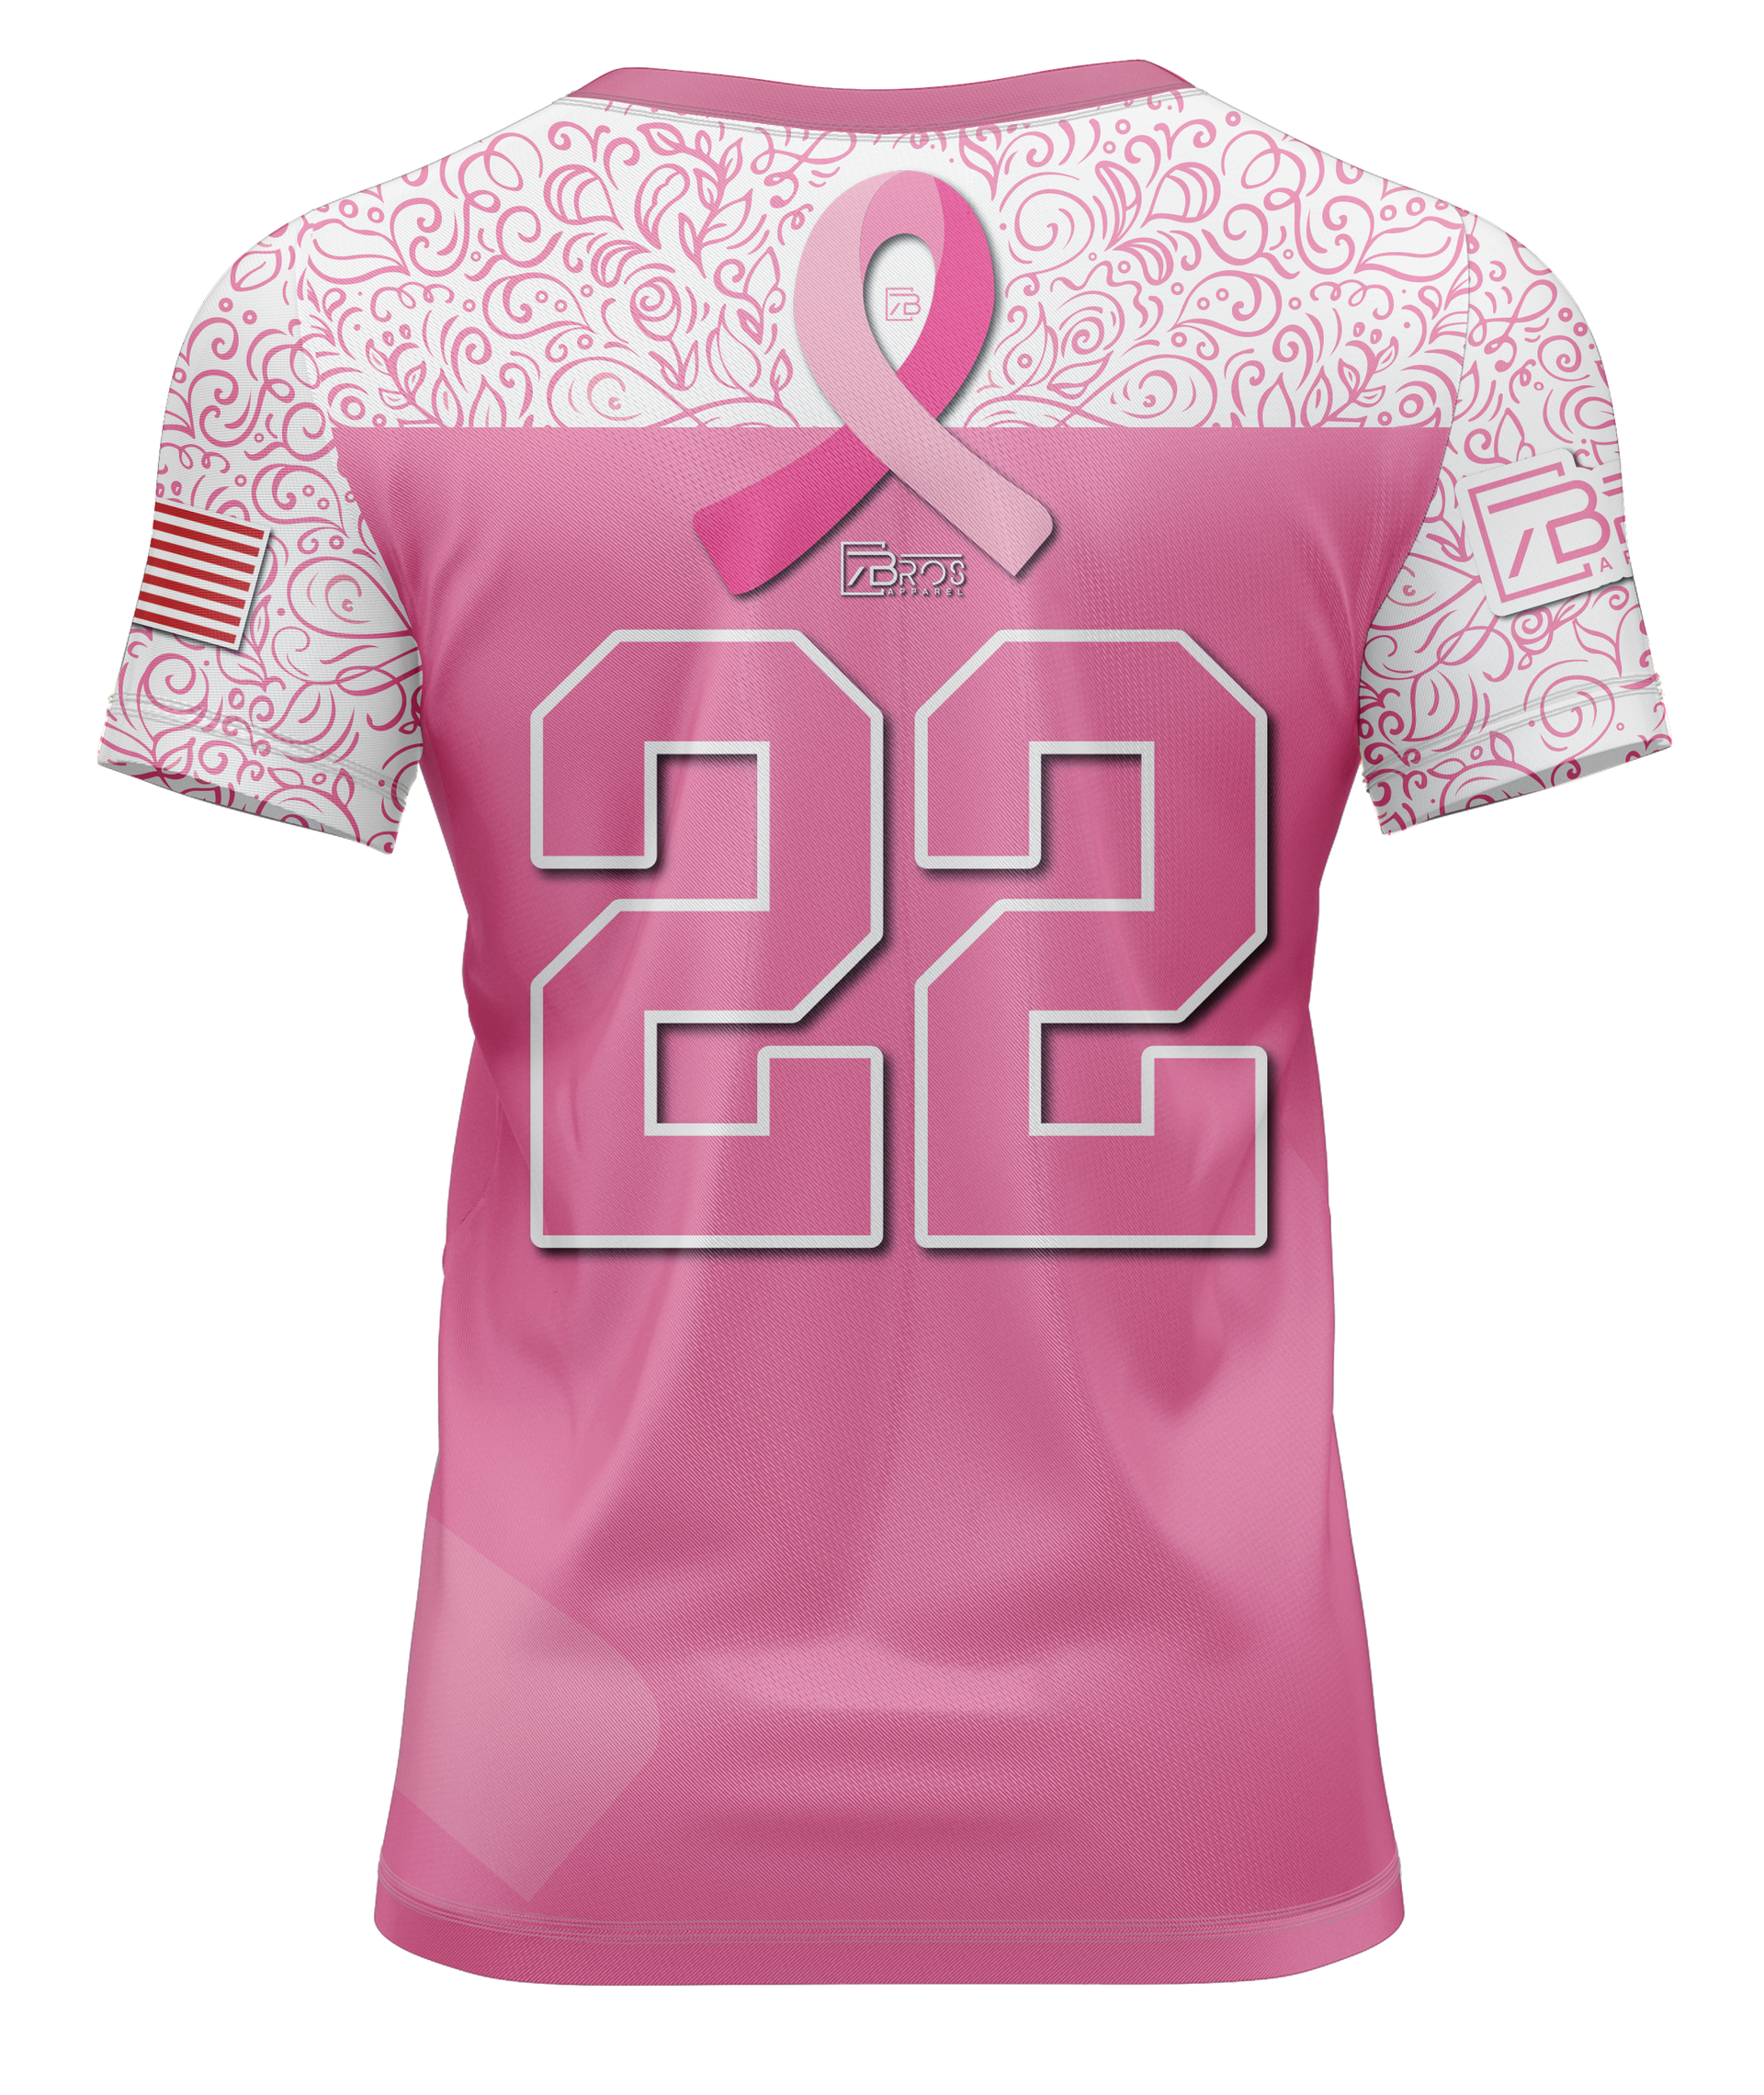 Breast Cancer Awareness Uniforms & Jerseys